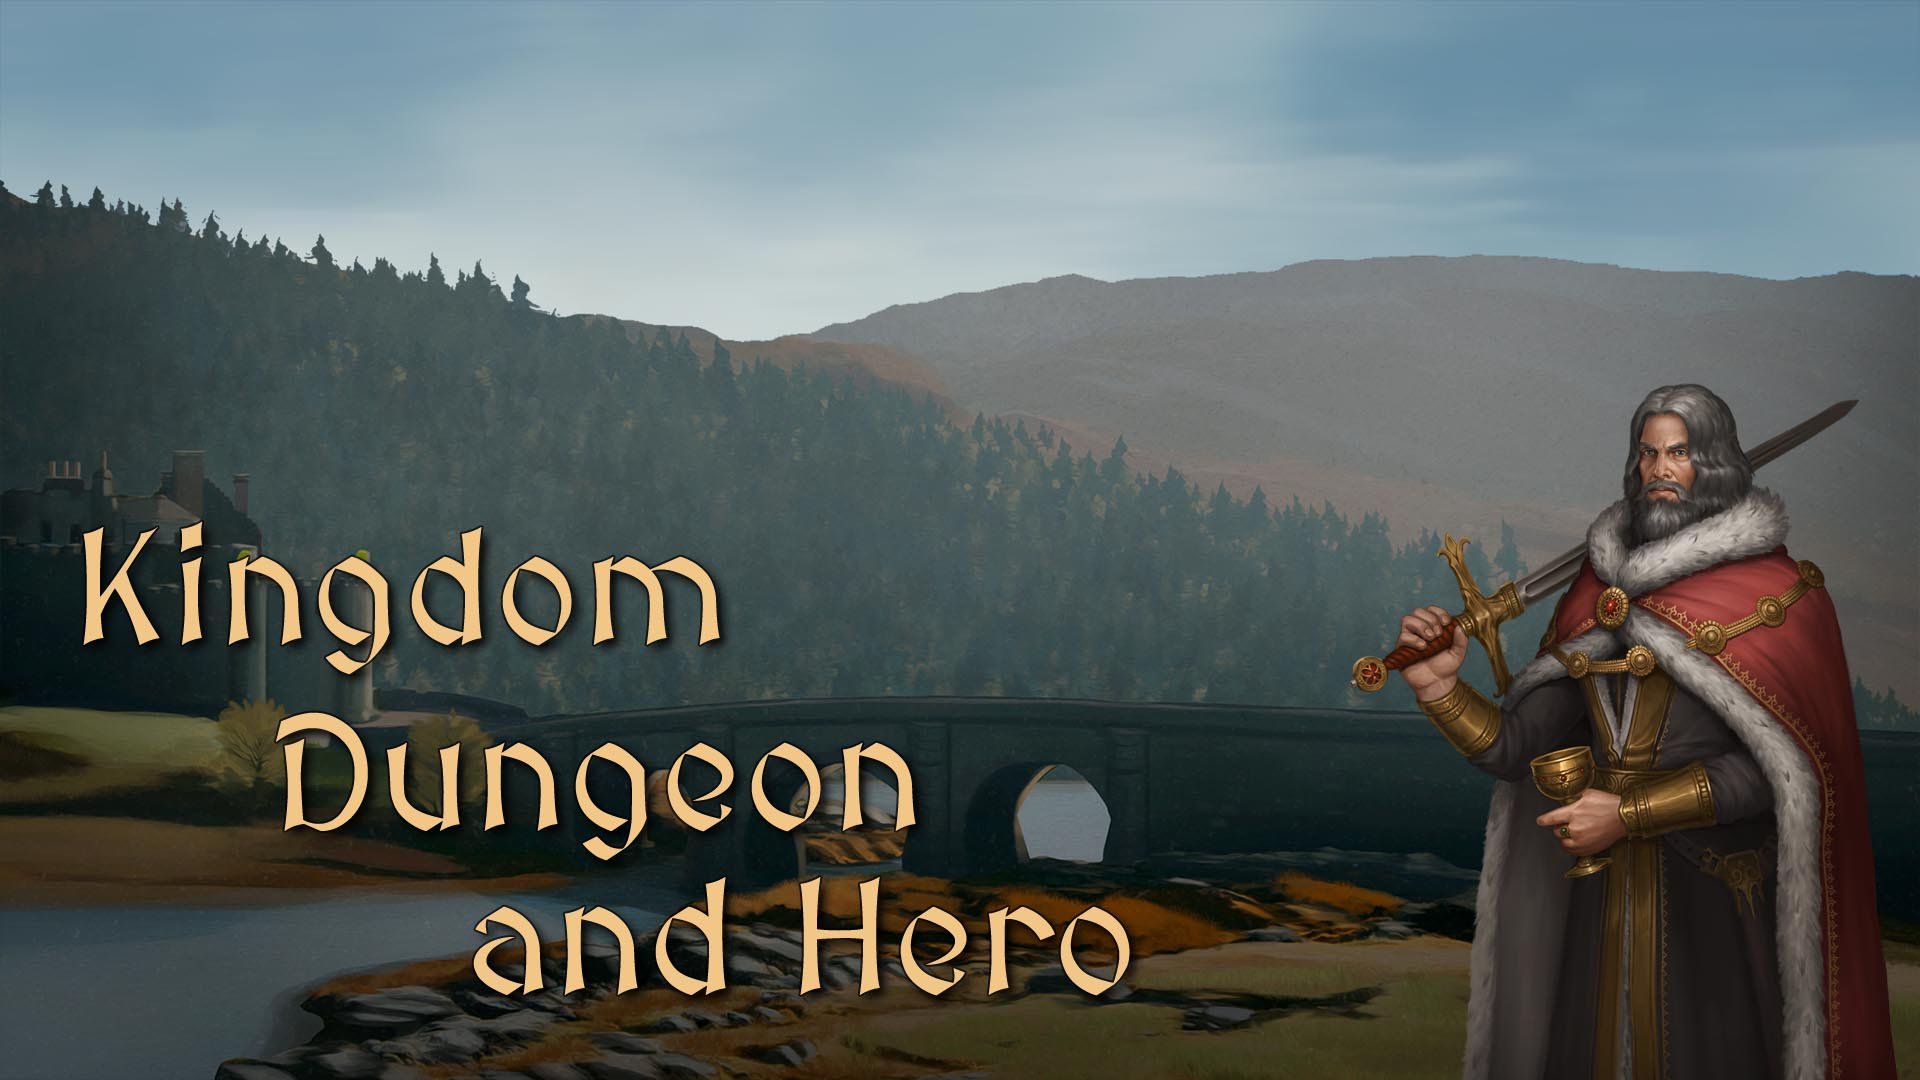 Kingdom, dungeon and Hero